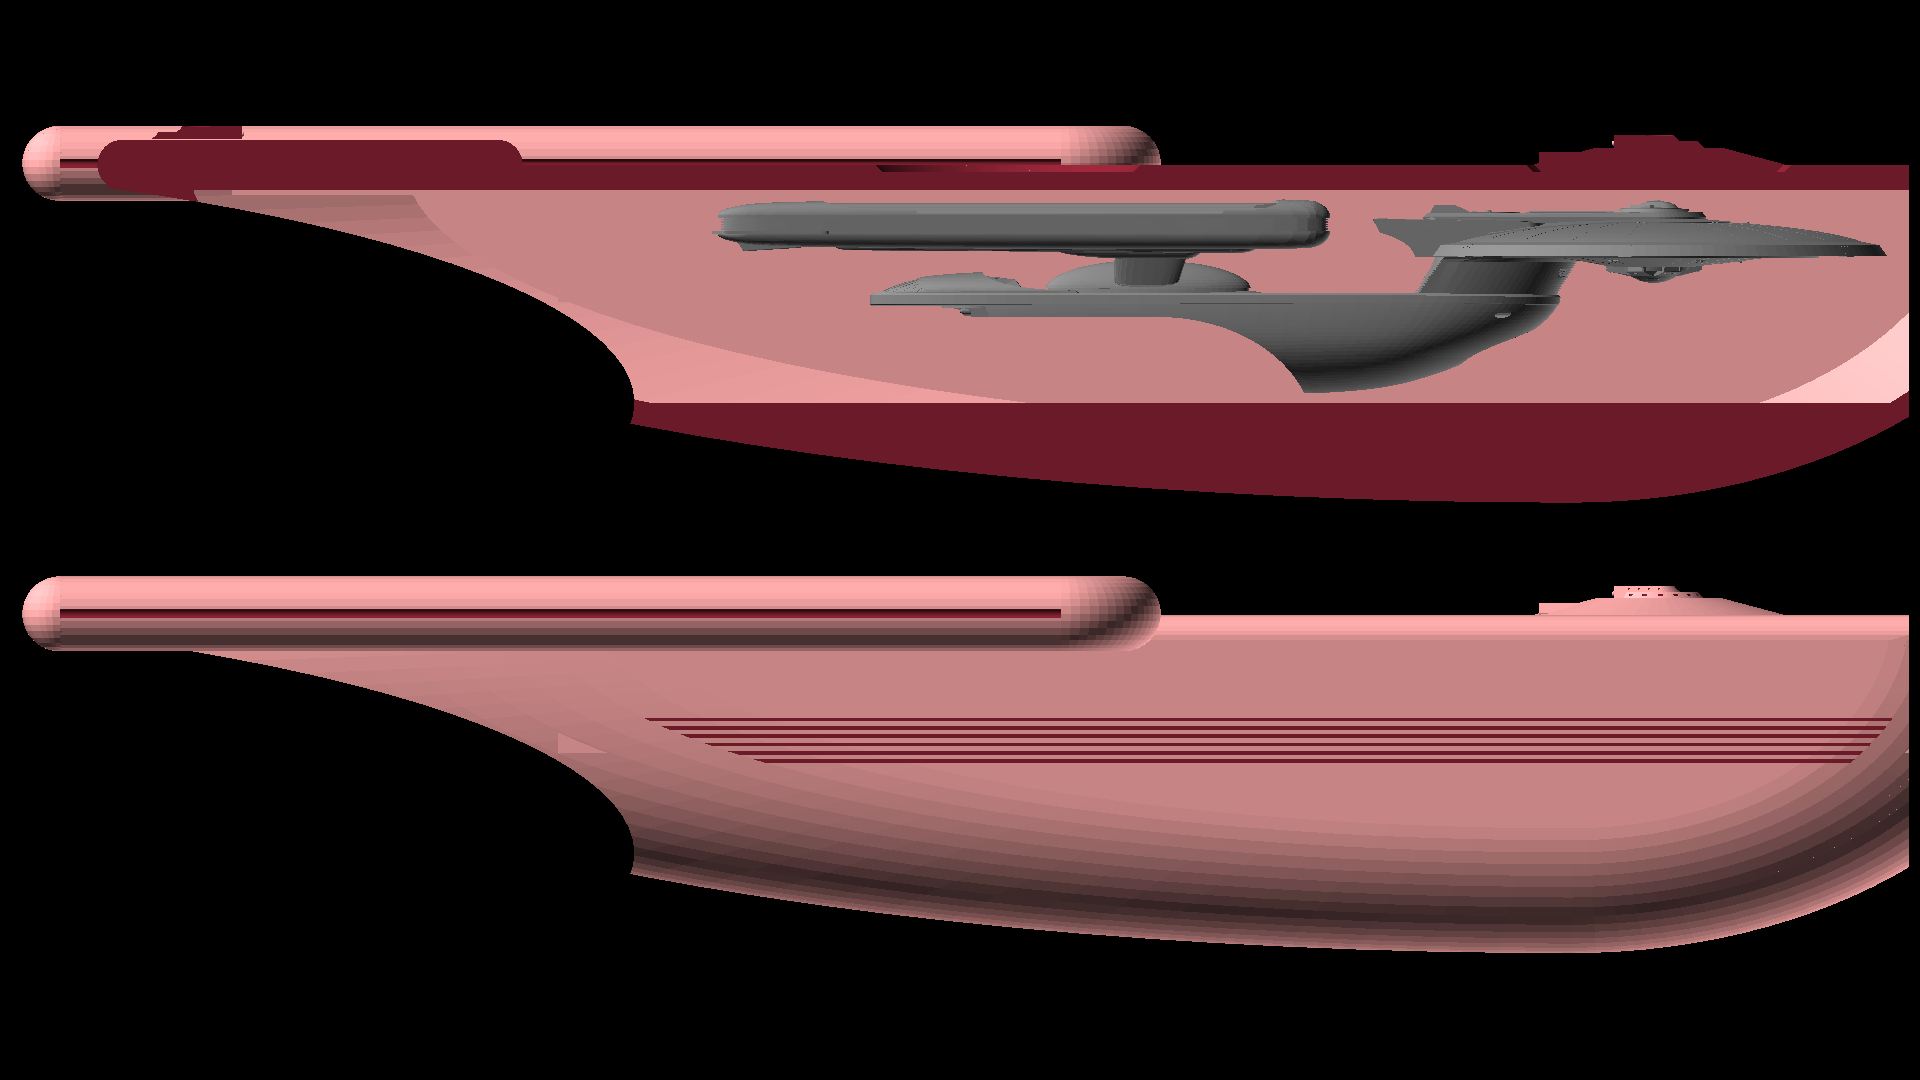 Ship scale